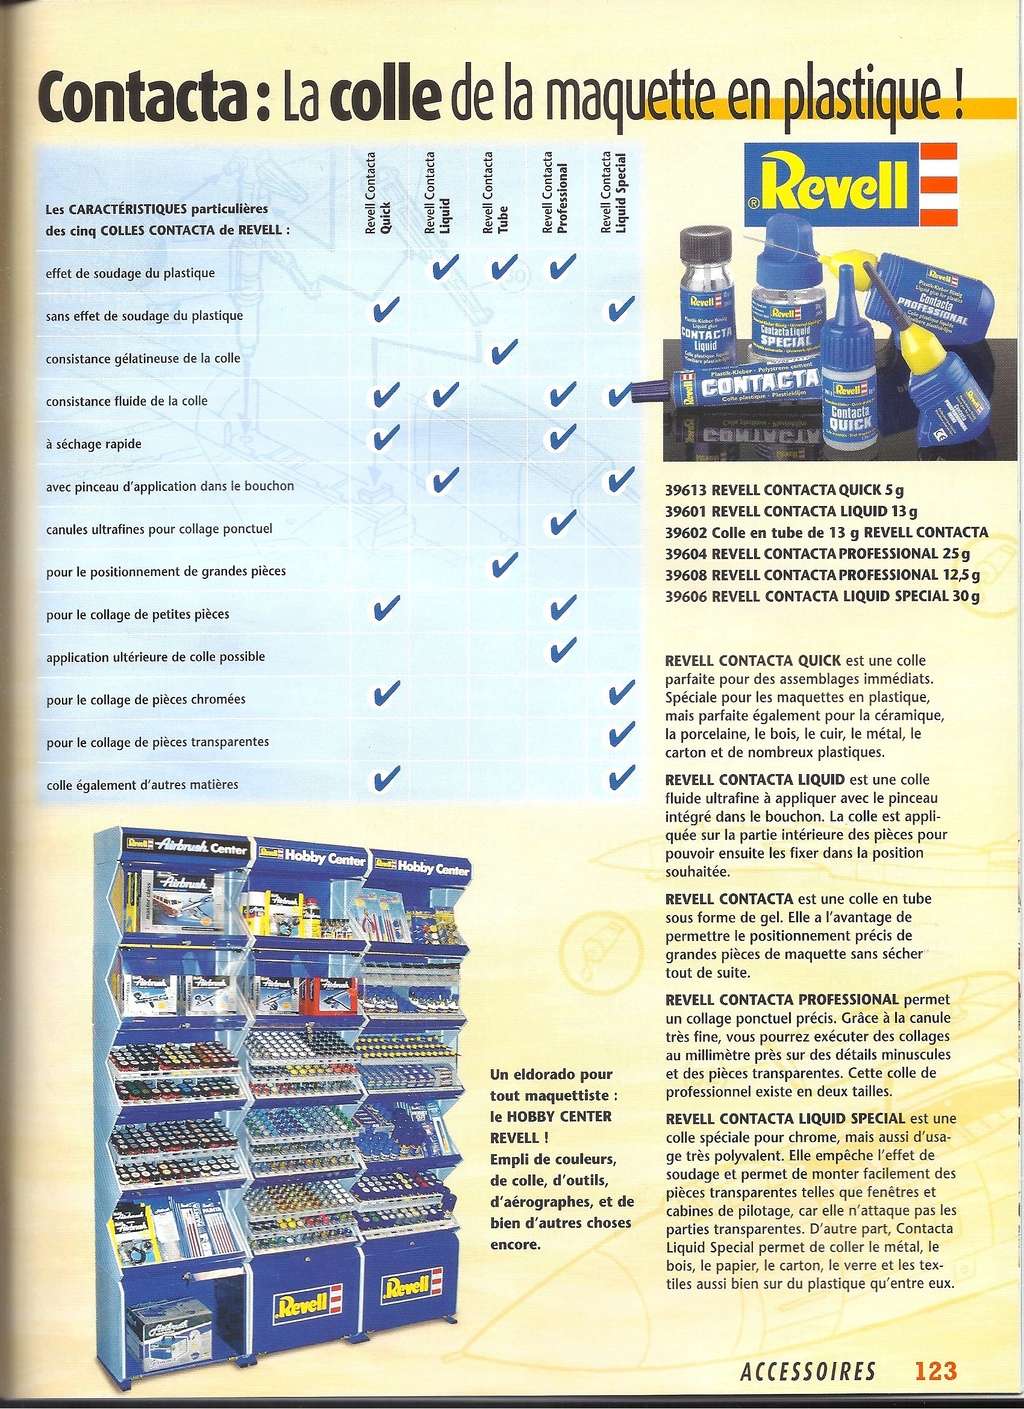 [REVELL 2006] Catalogue 2006, les 50 ans de la marque Revel548